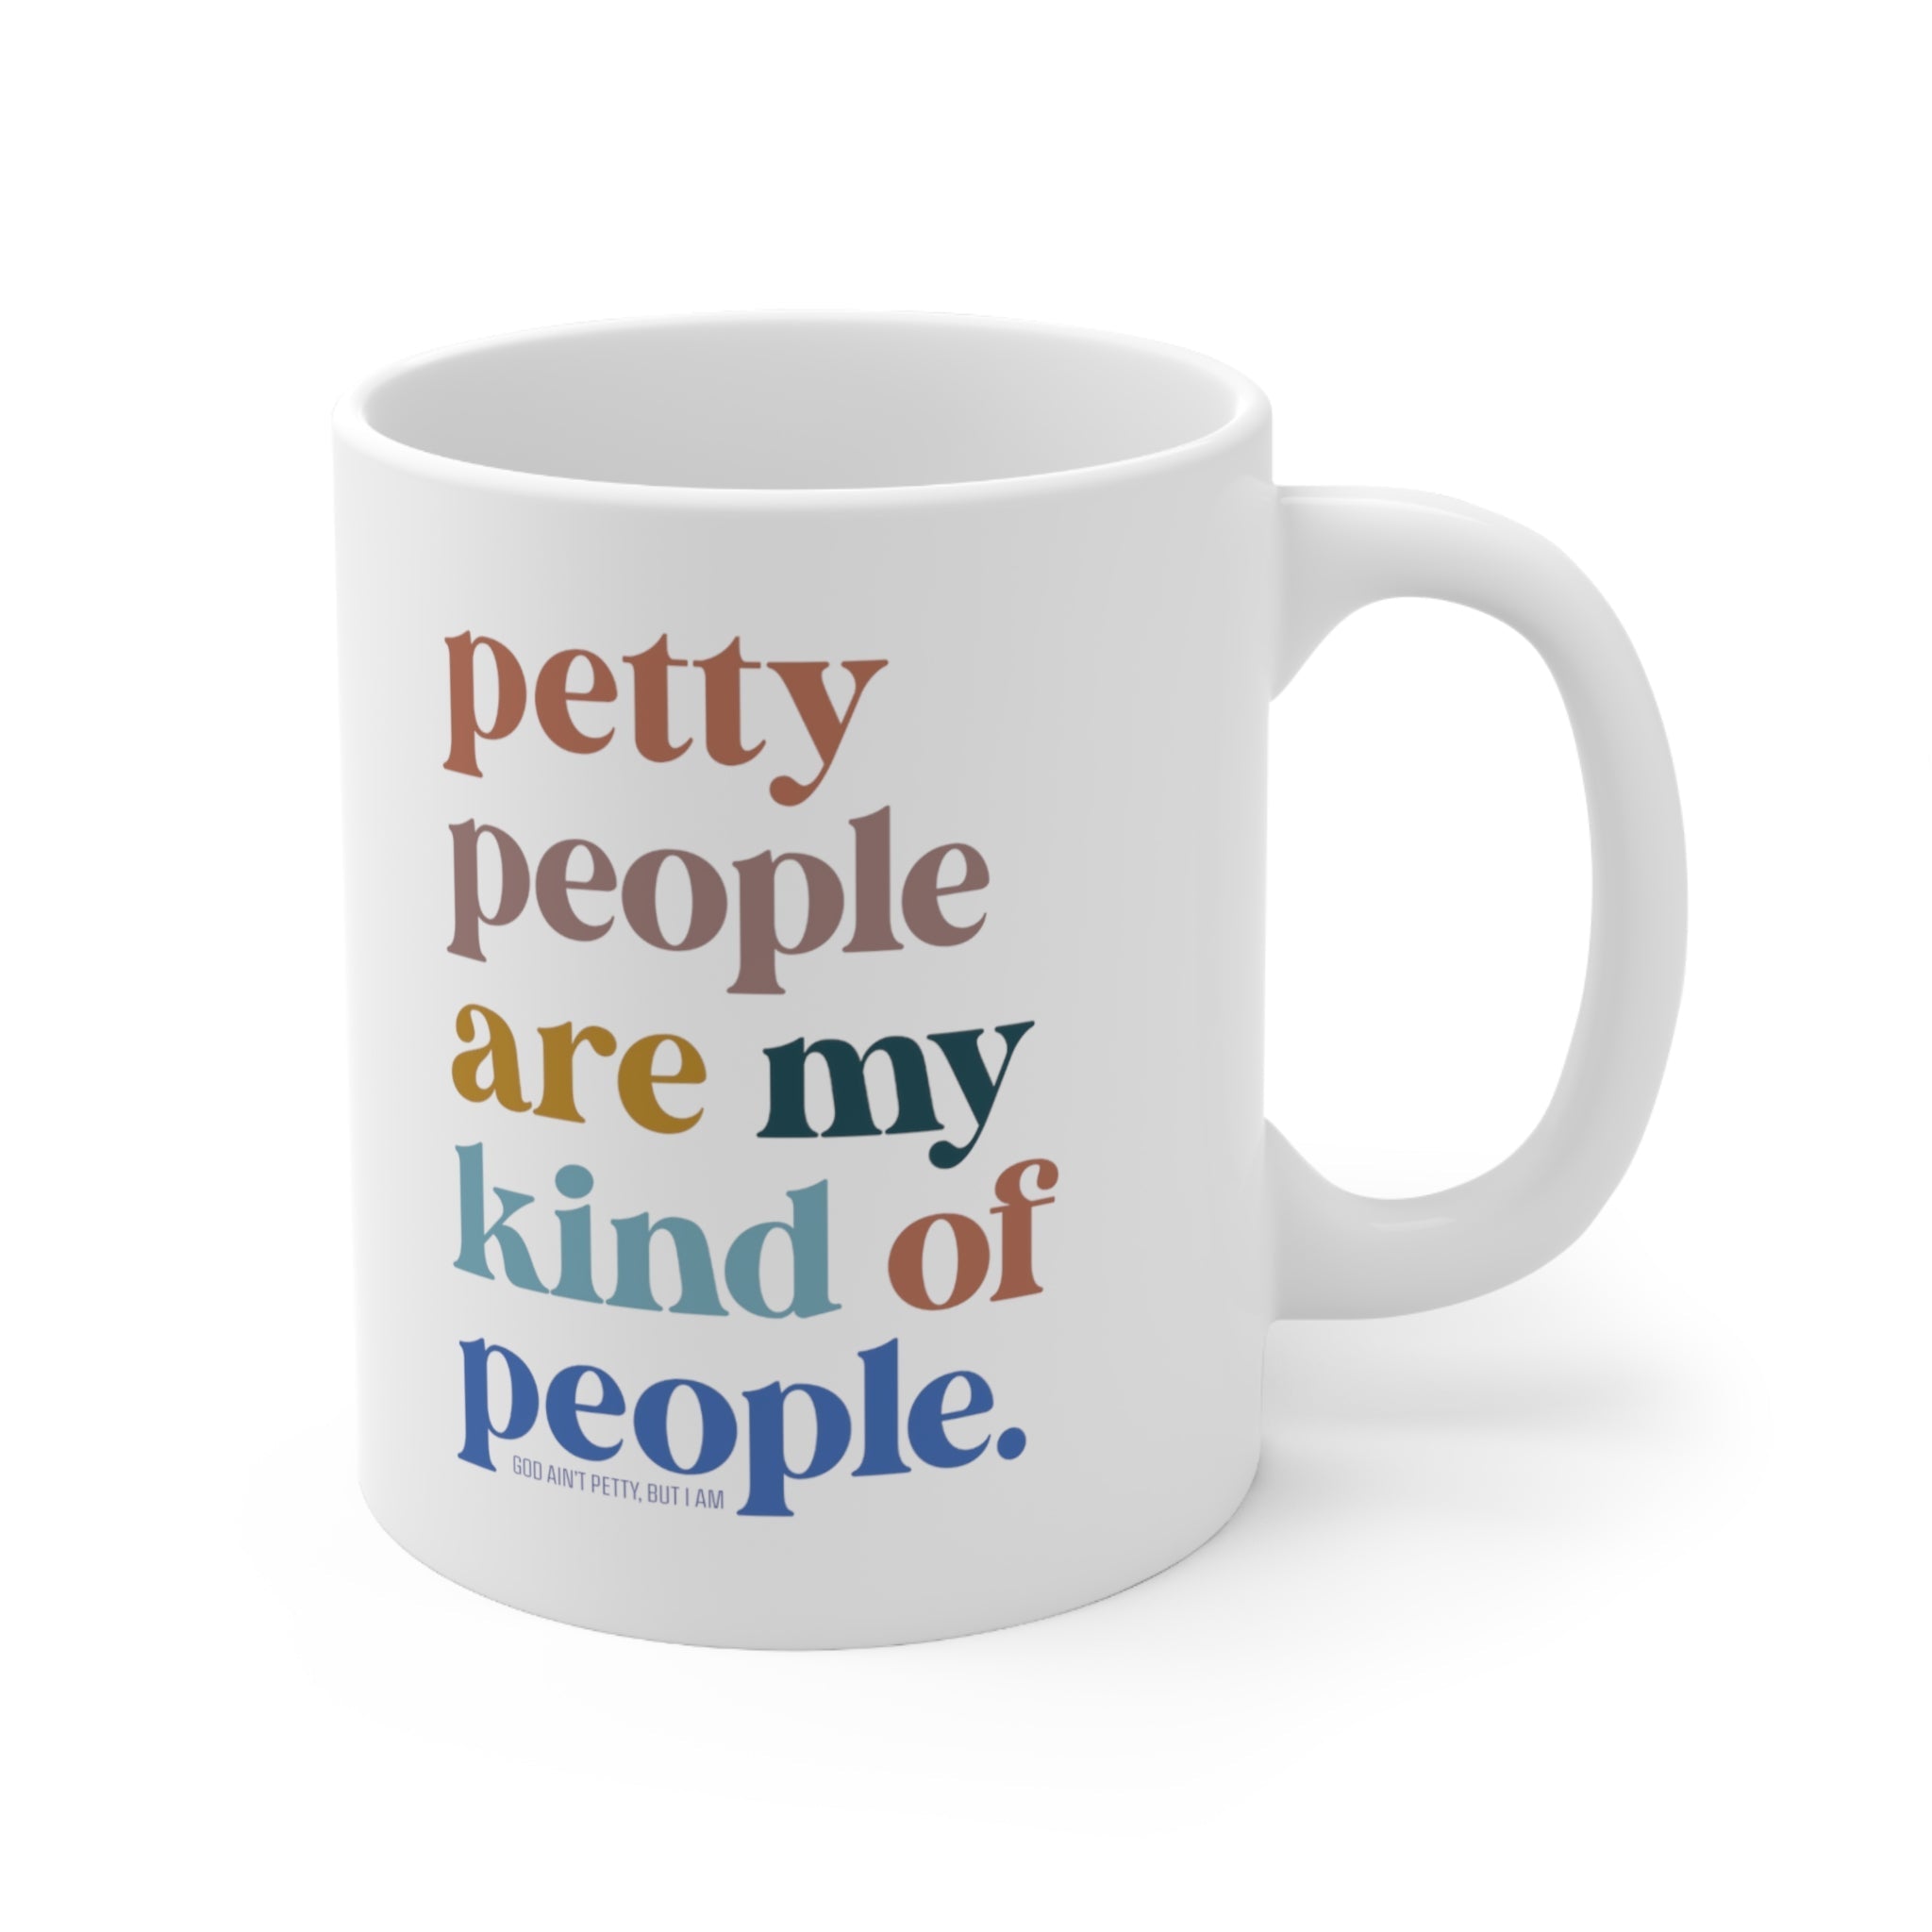 Petty People are my kind of People Mug 11oz (White/Black)-Mug-The Original God Ain't Petty But I Am